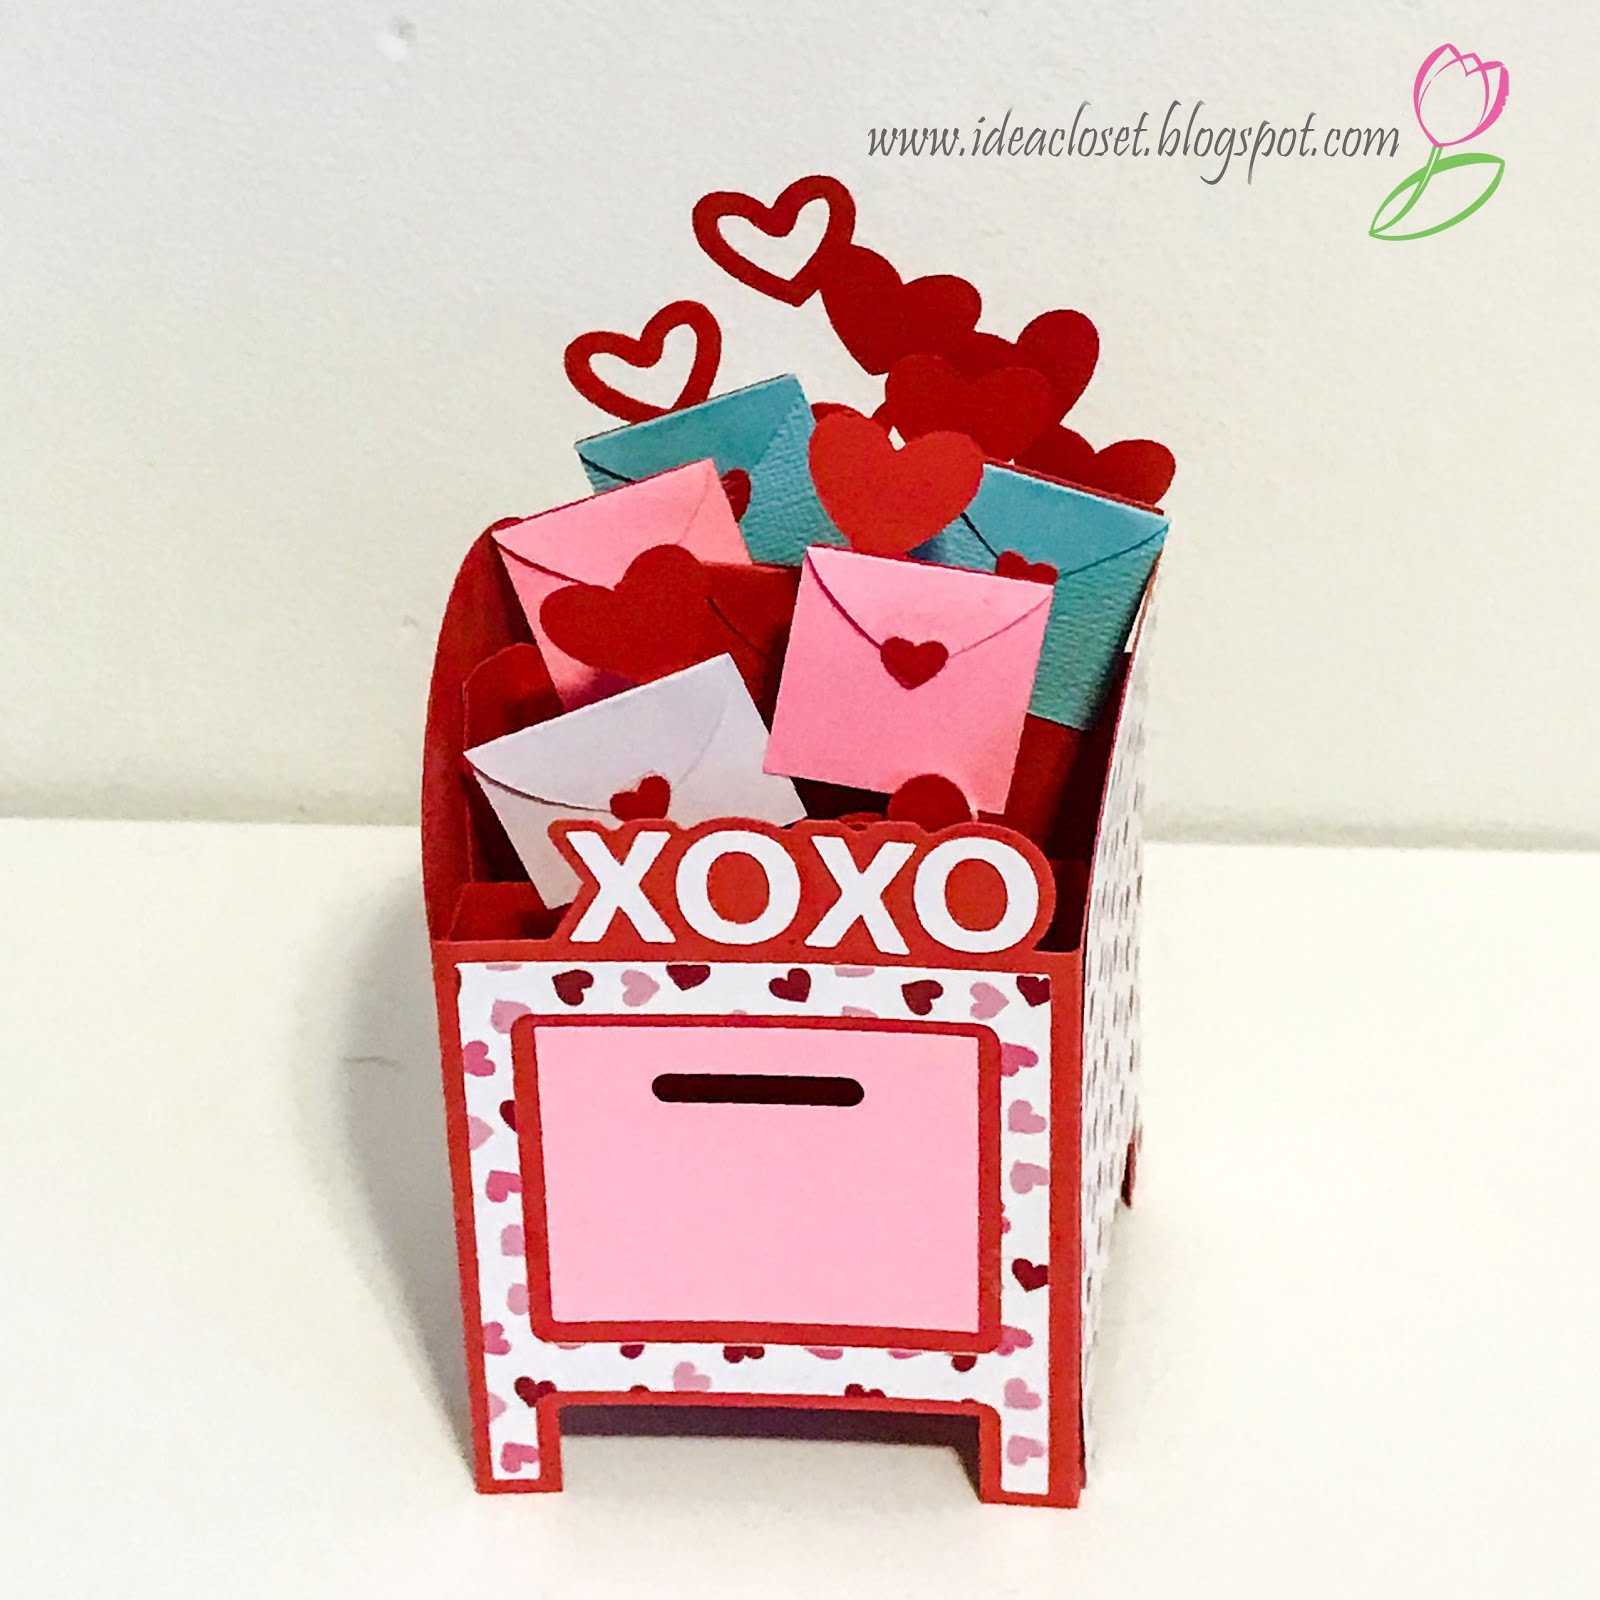 Valentine Box Cards From SVG Cuts | Idea Closet